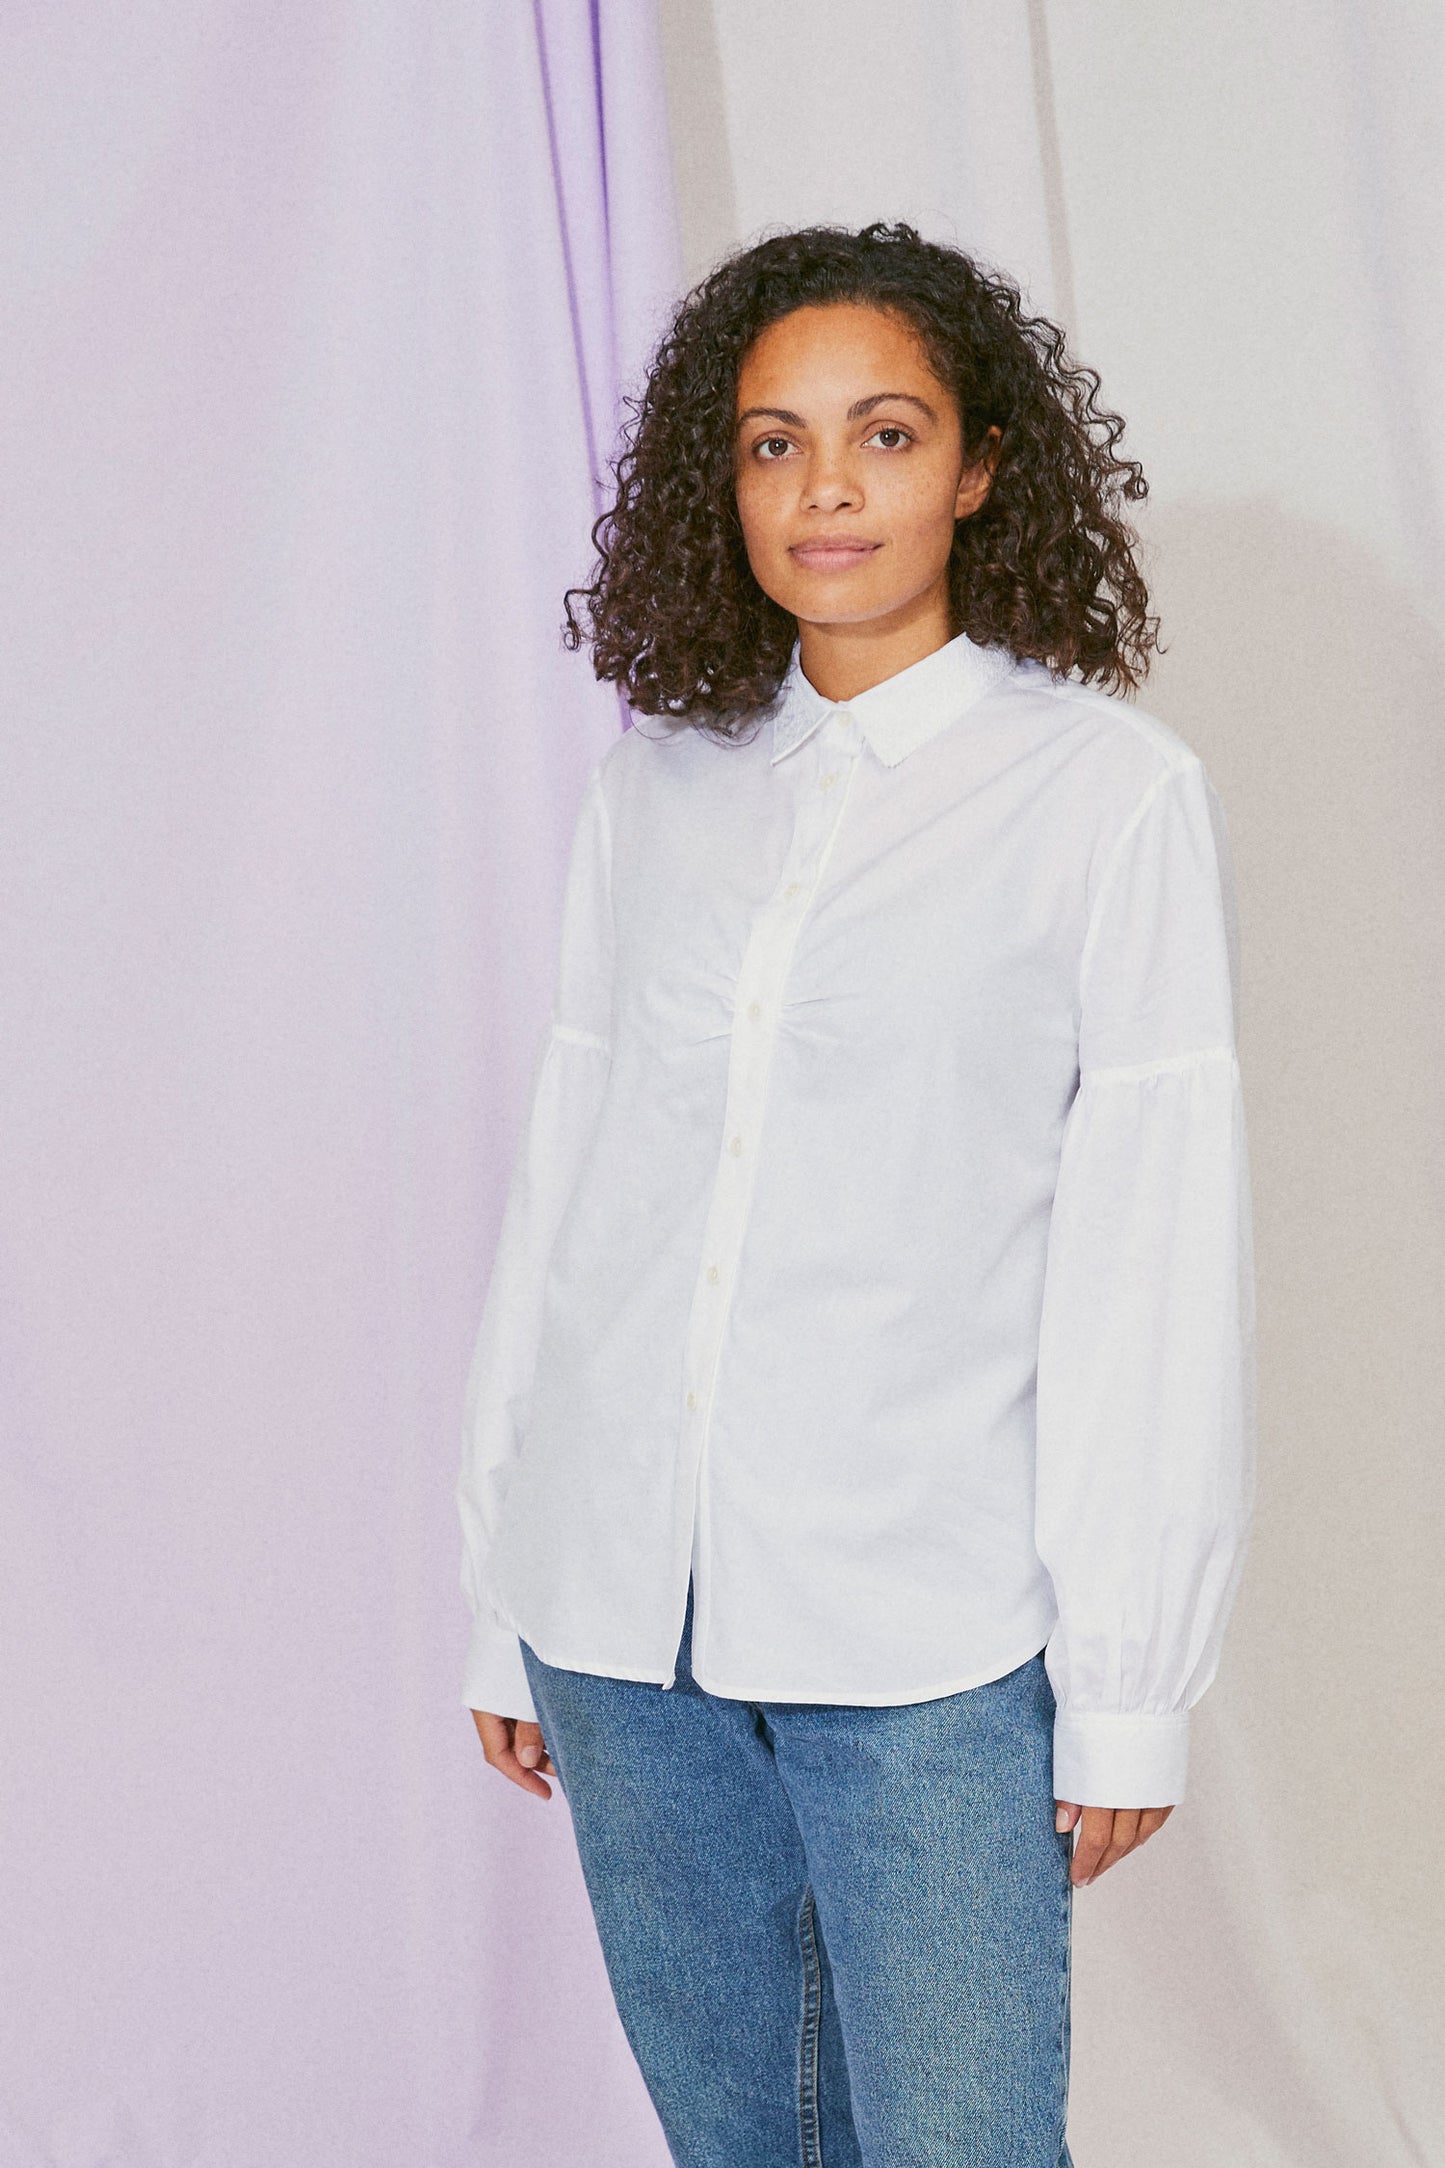 Women's Shirt, Saywood Studio, Edi Volume Sleeve Shirt, White shirt with lace collar